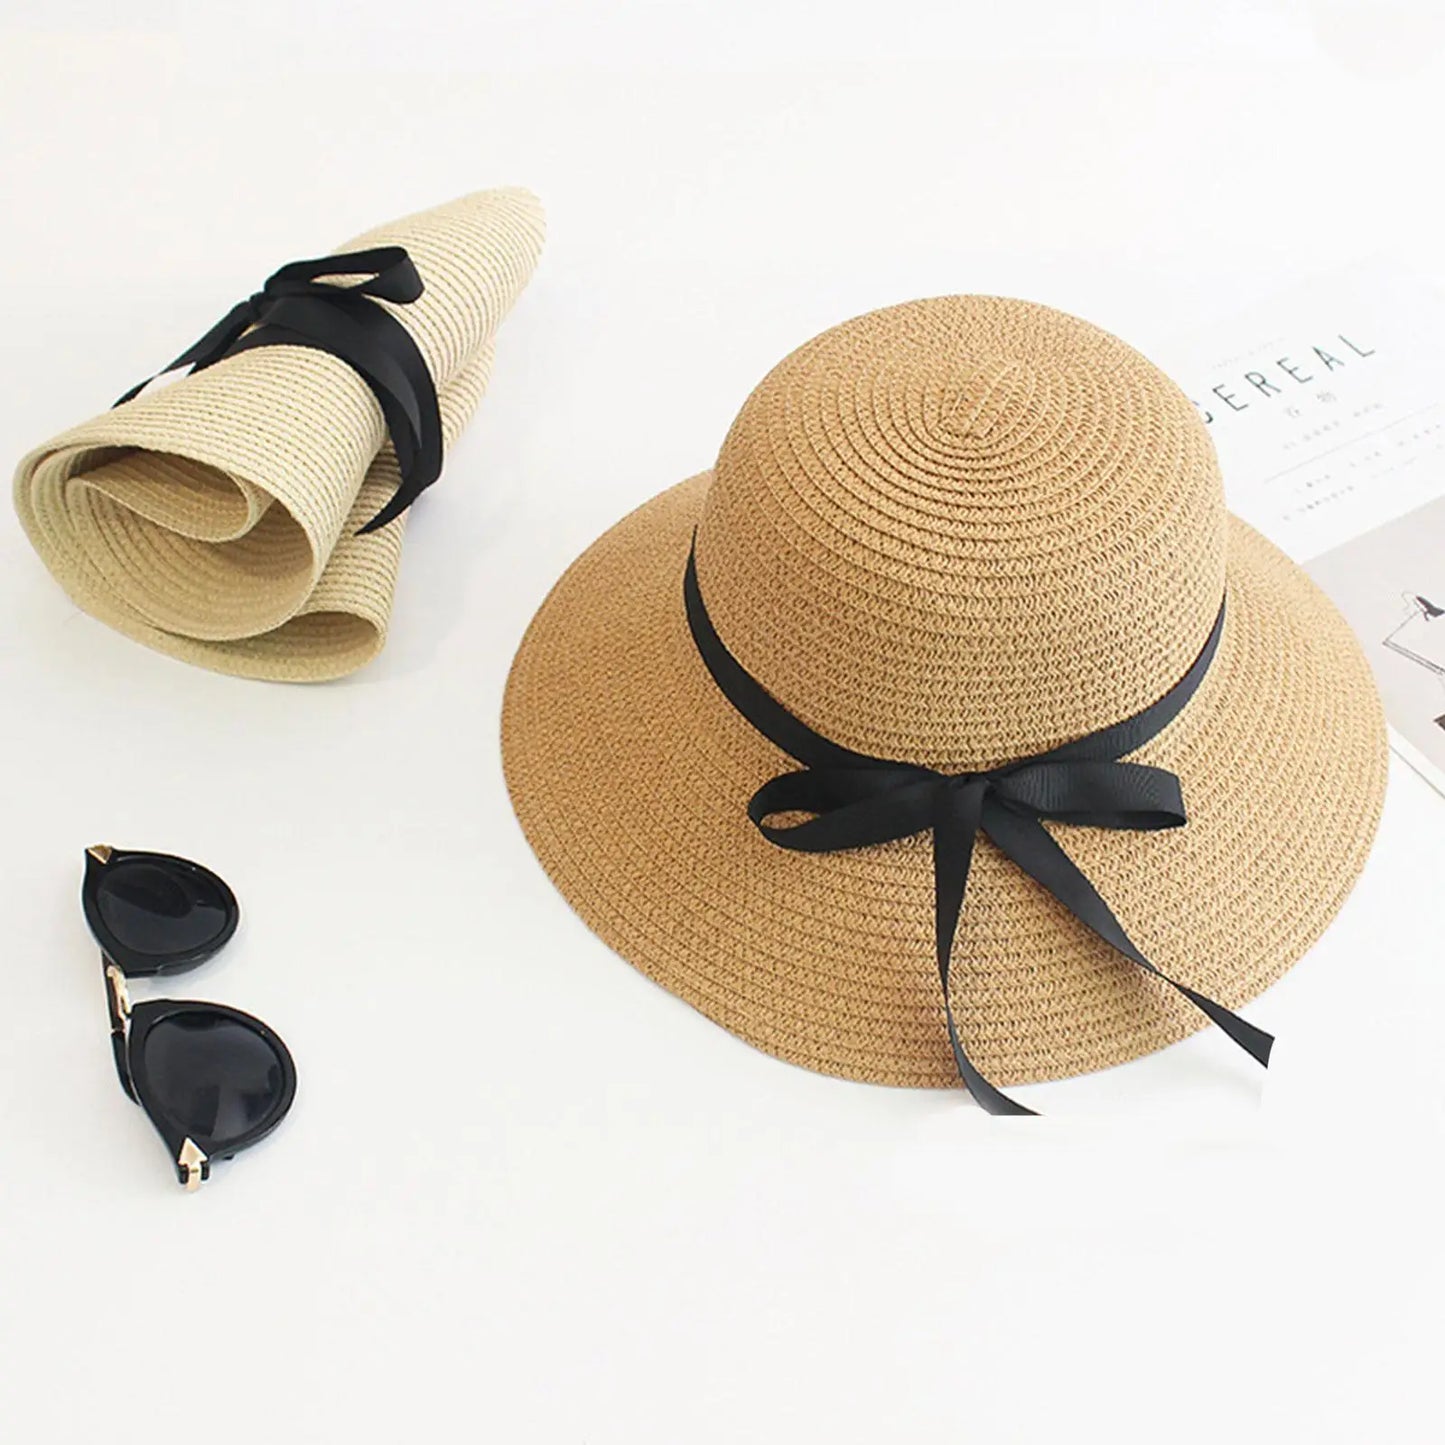 Summer Hats For Women Sun Hat Beach Ladies Fashion Flat Bowknot Panama Lady Casual Sun Hats For Women Straw Hat